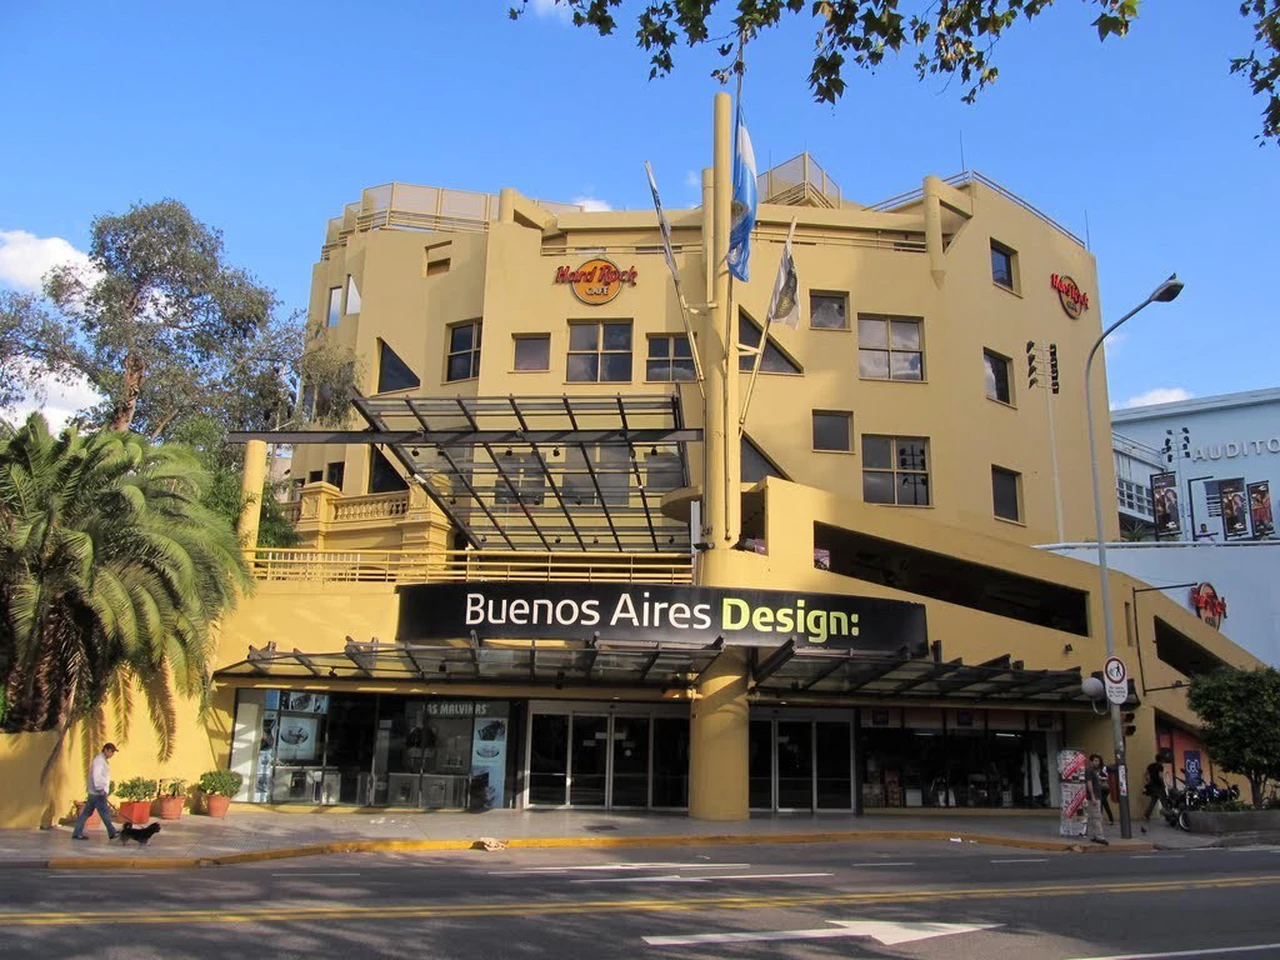 A fin de mes, cierra el Buenos Aires Design en Recoleta